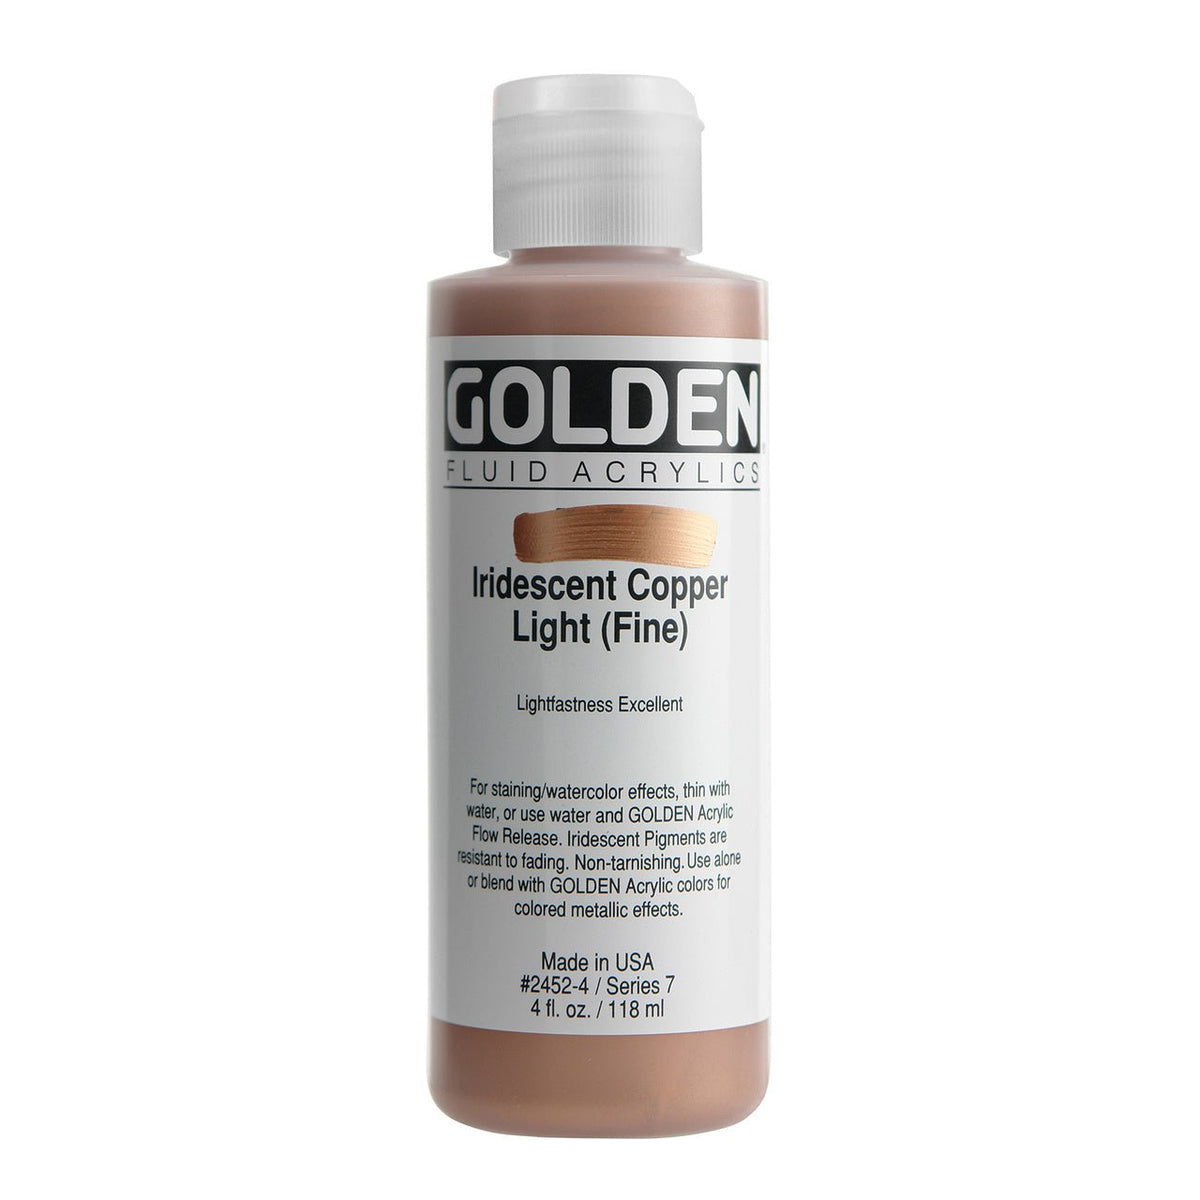 Golden Fluid Acrylic Iridescent Copper Light (fine) 4 oz - merriartist.com